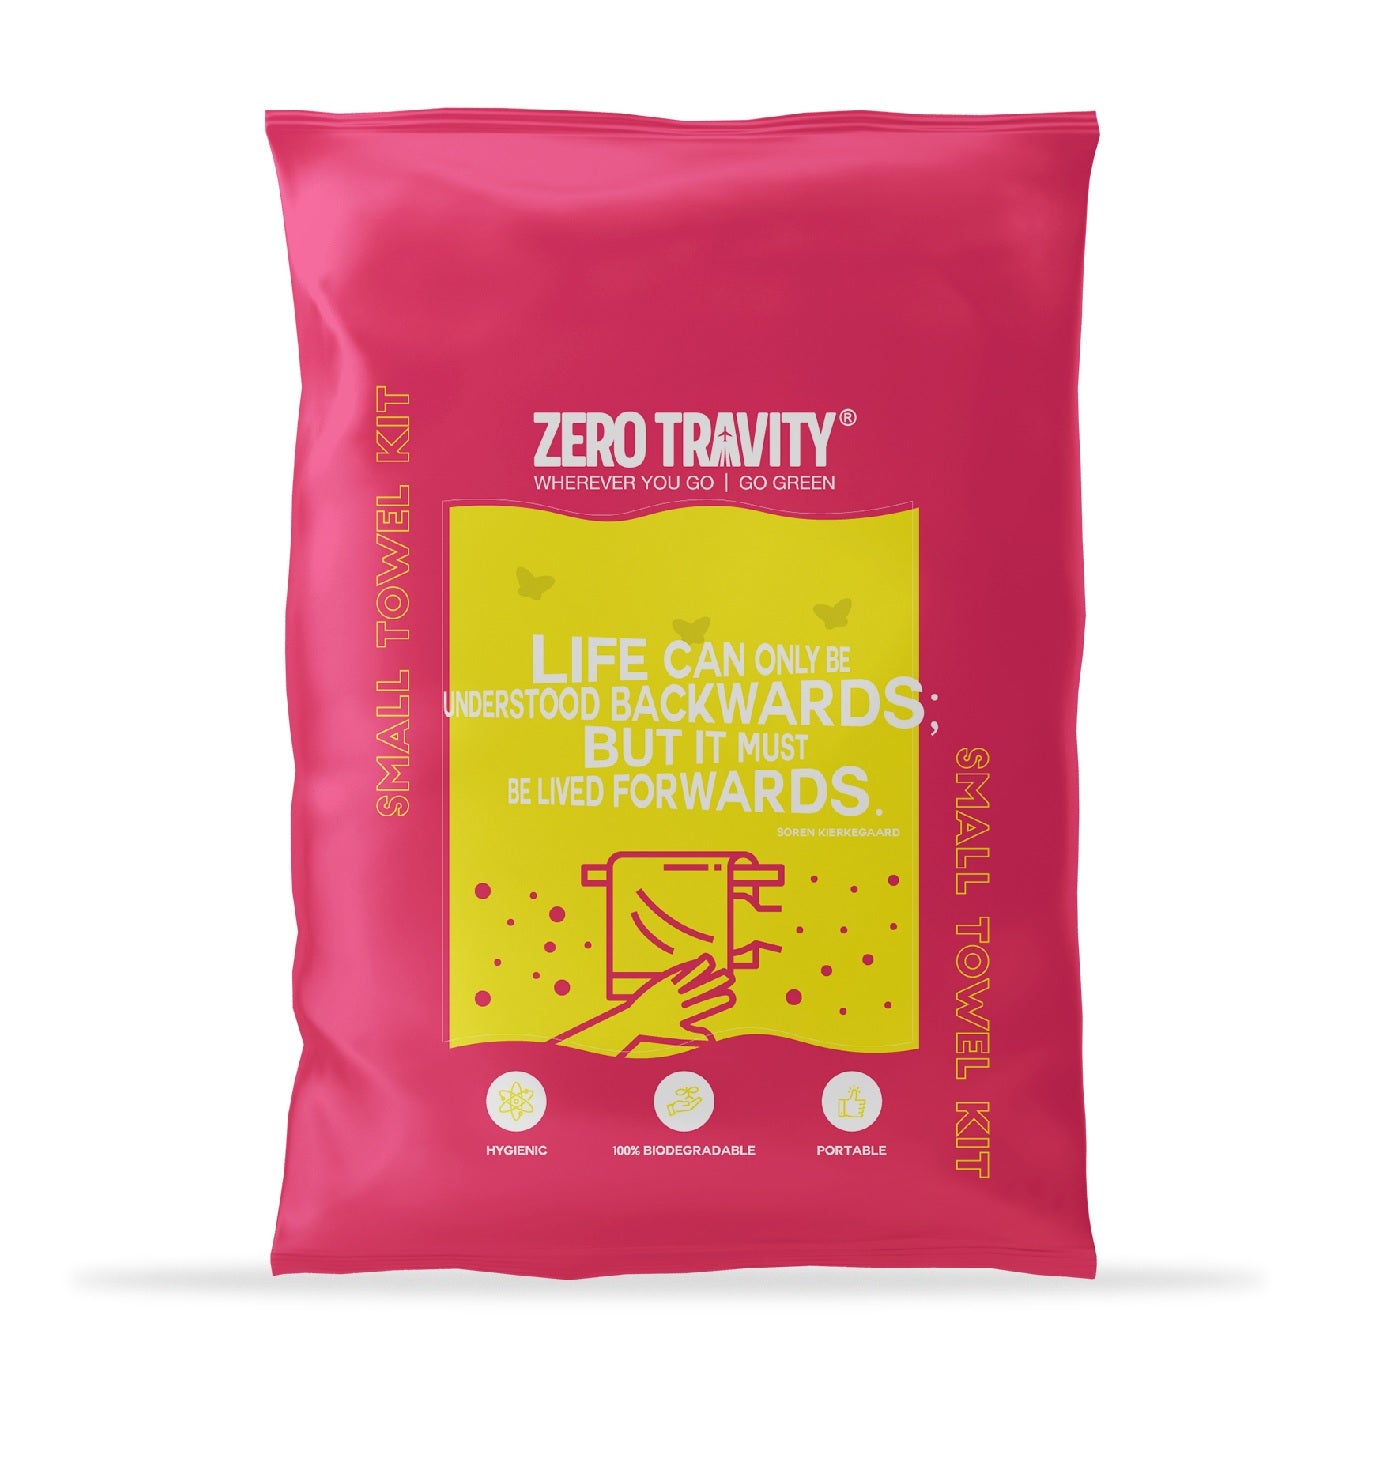 ZERO TRAVITY - Accompanying Eco-Friendly Small Towel Set (3 Towels)